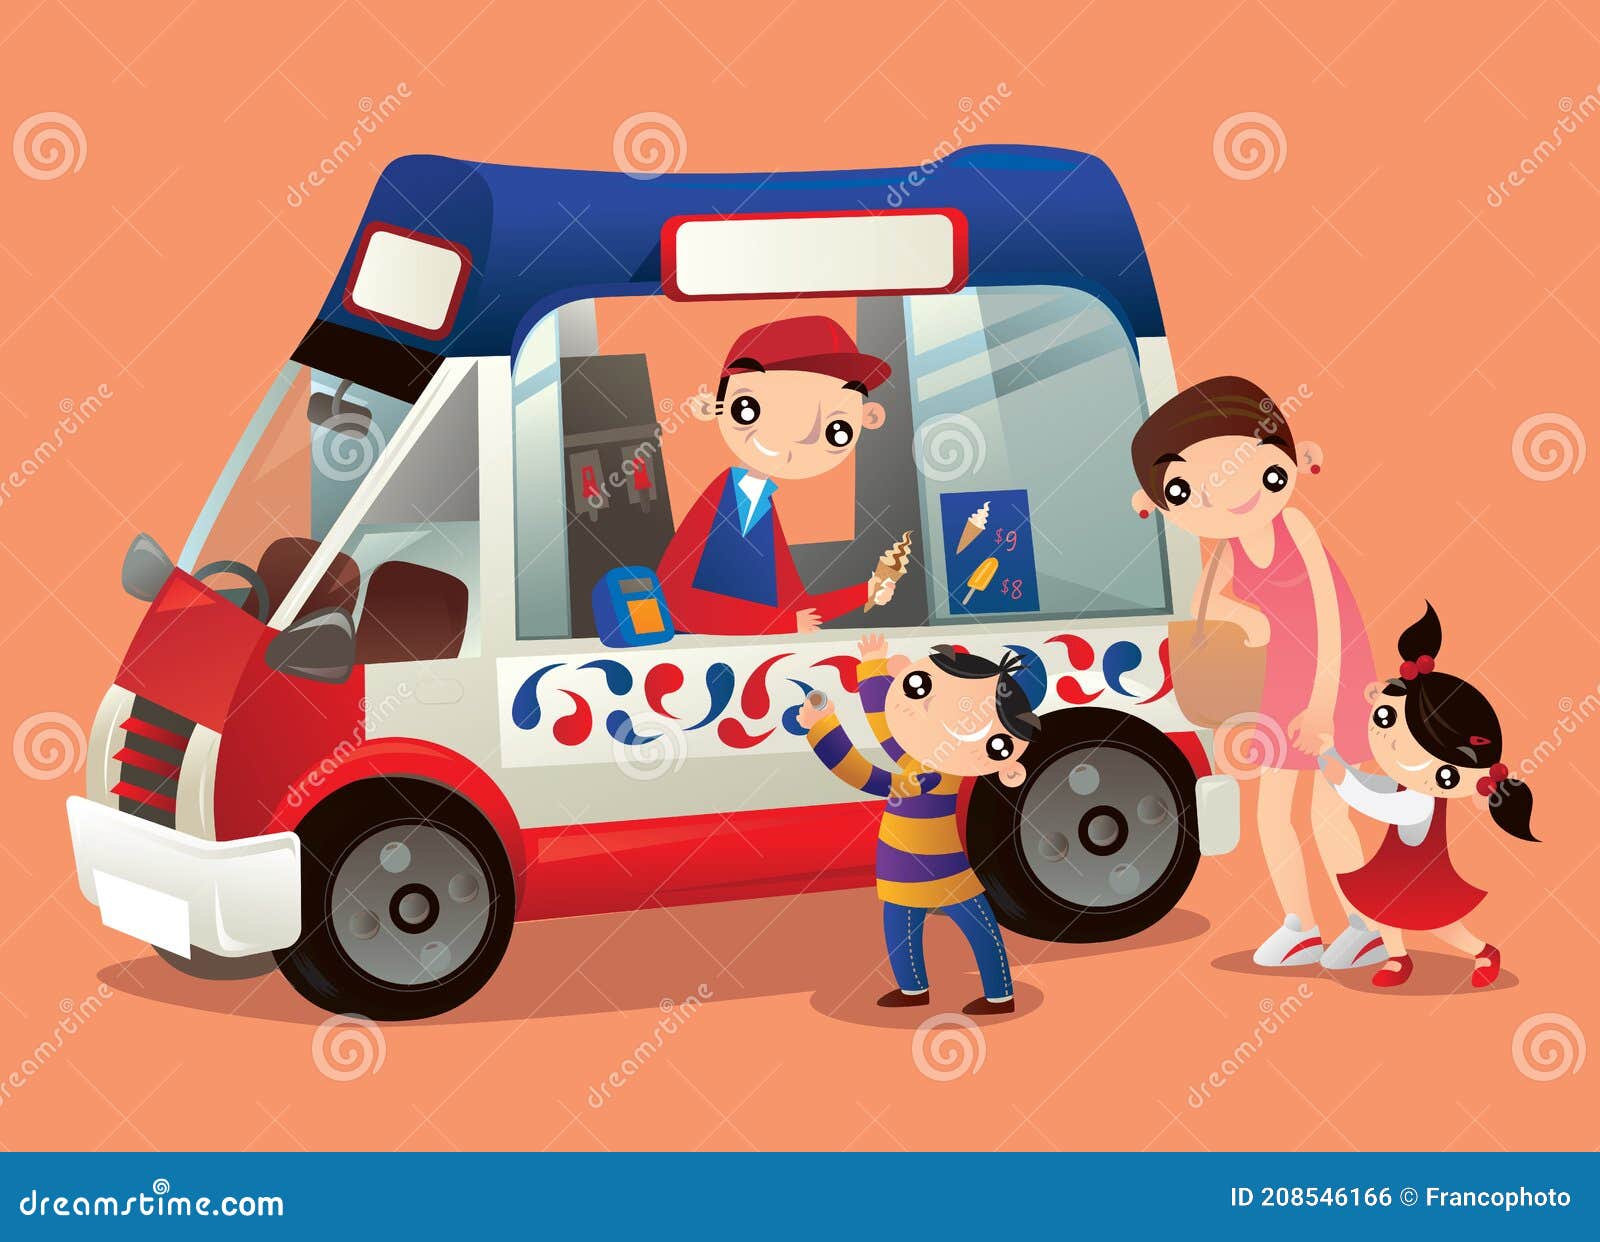 cartoon  of an ice-cream truck vendor in hong kong